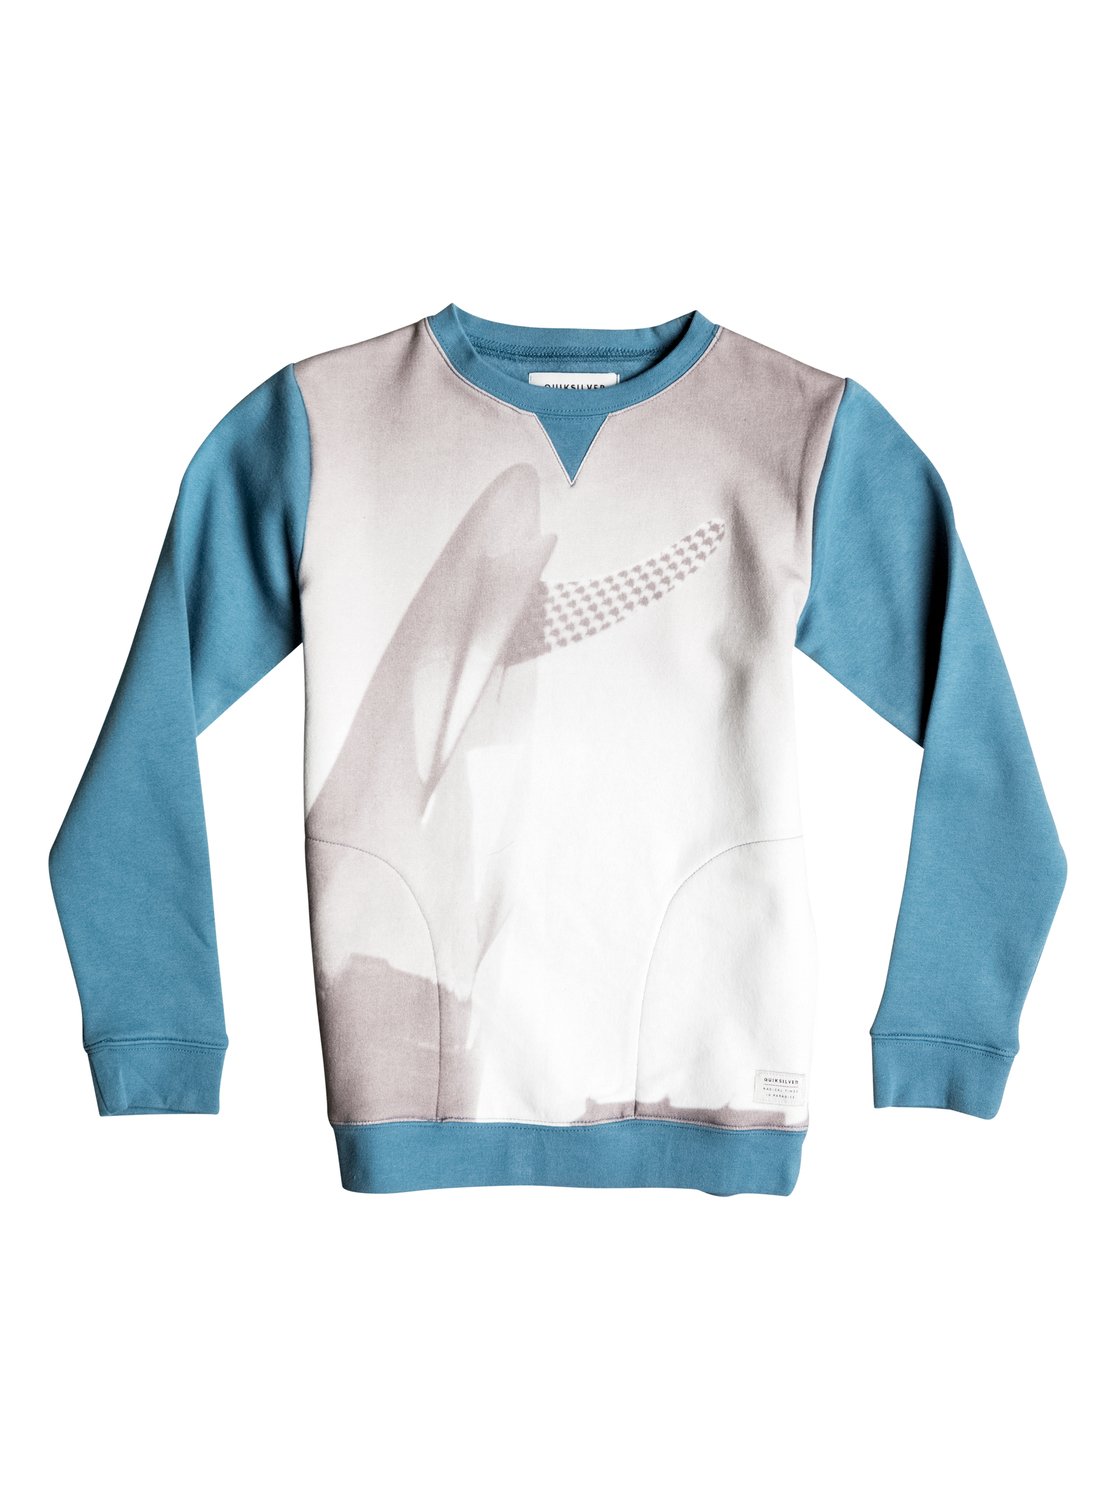 Quiksilver Photoprint kinder sweater captains blue